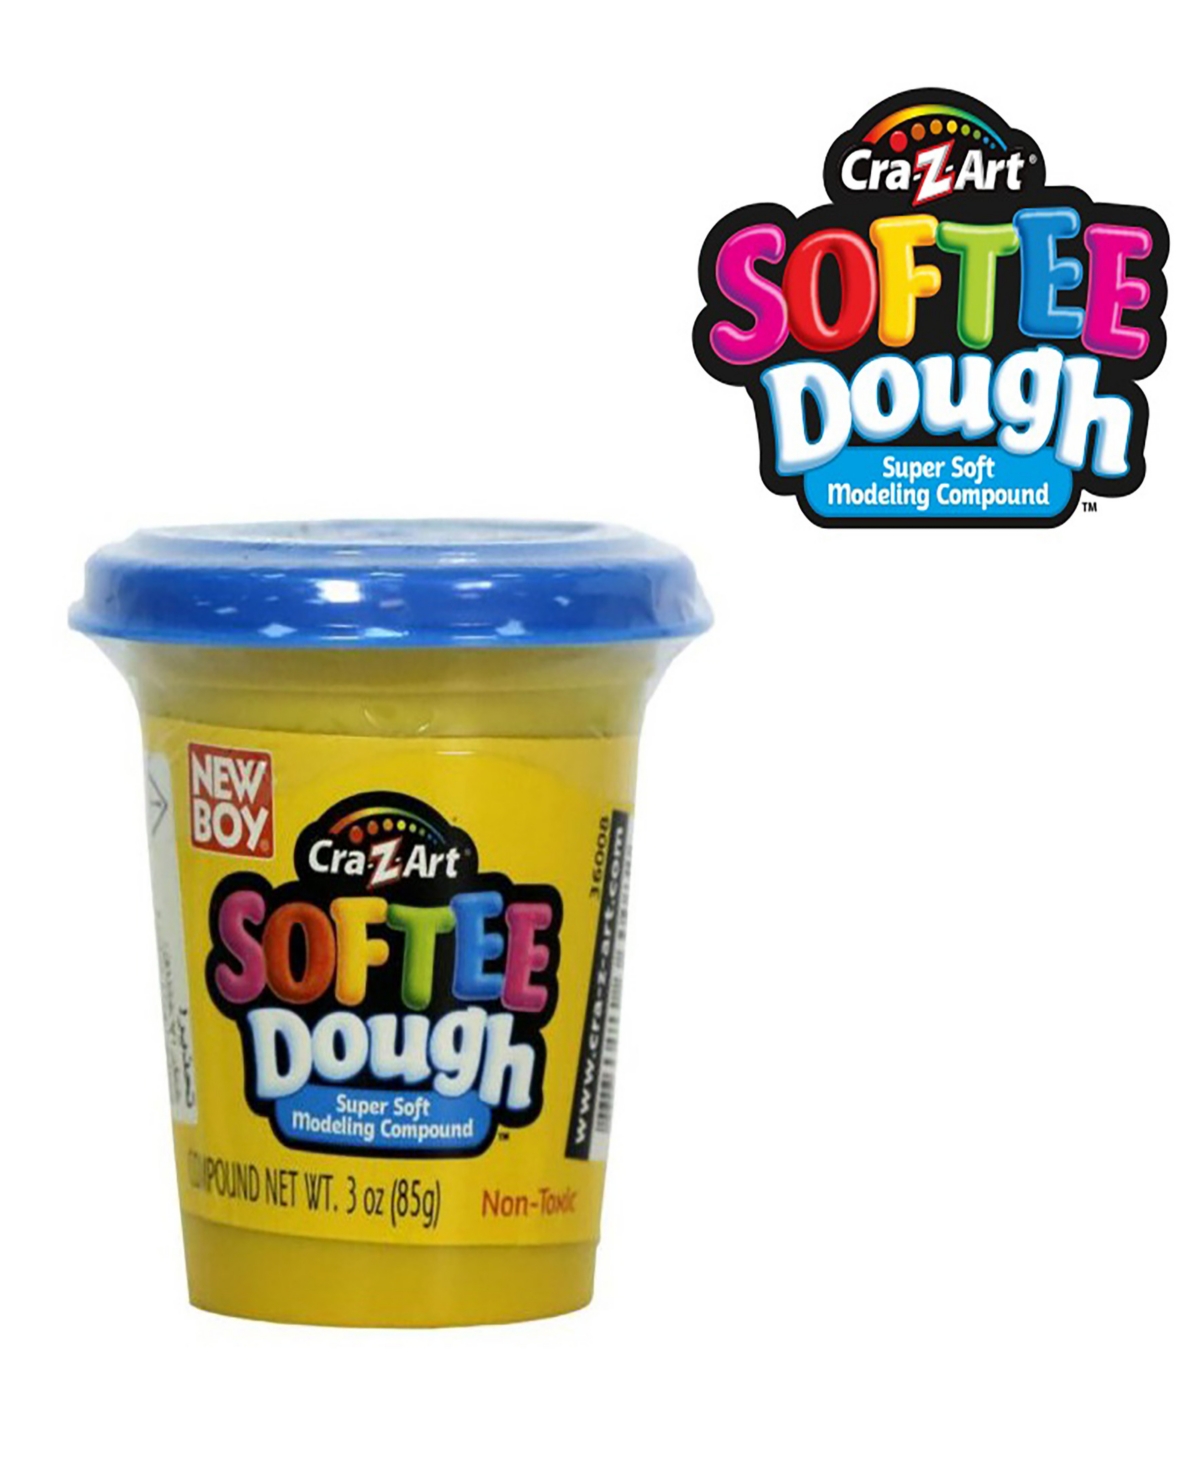 Shop Cra-z-art Softee Dough Smart Pack In Multi